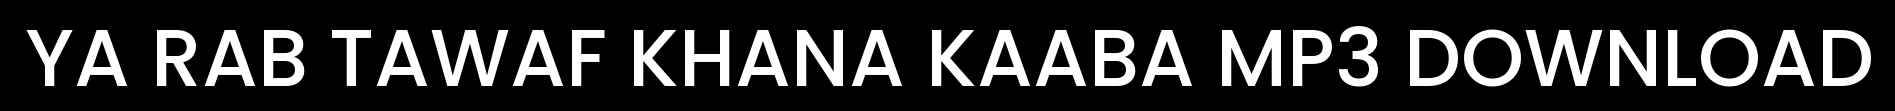 Ya Rab Tawaf Khana Kaaba MP3 Download